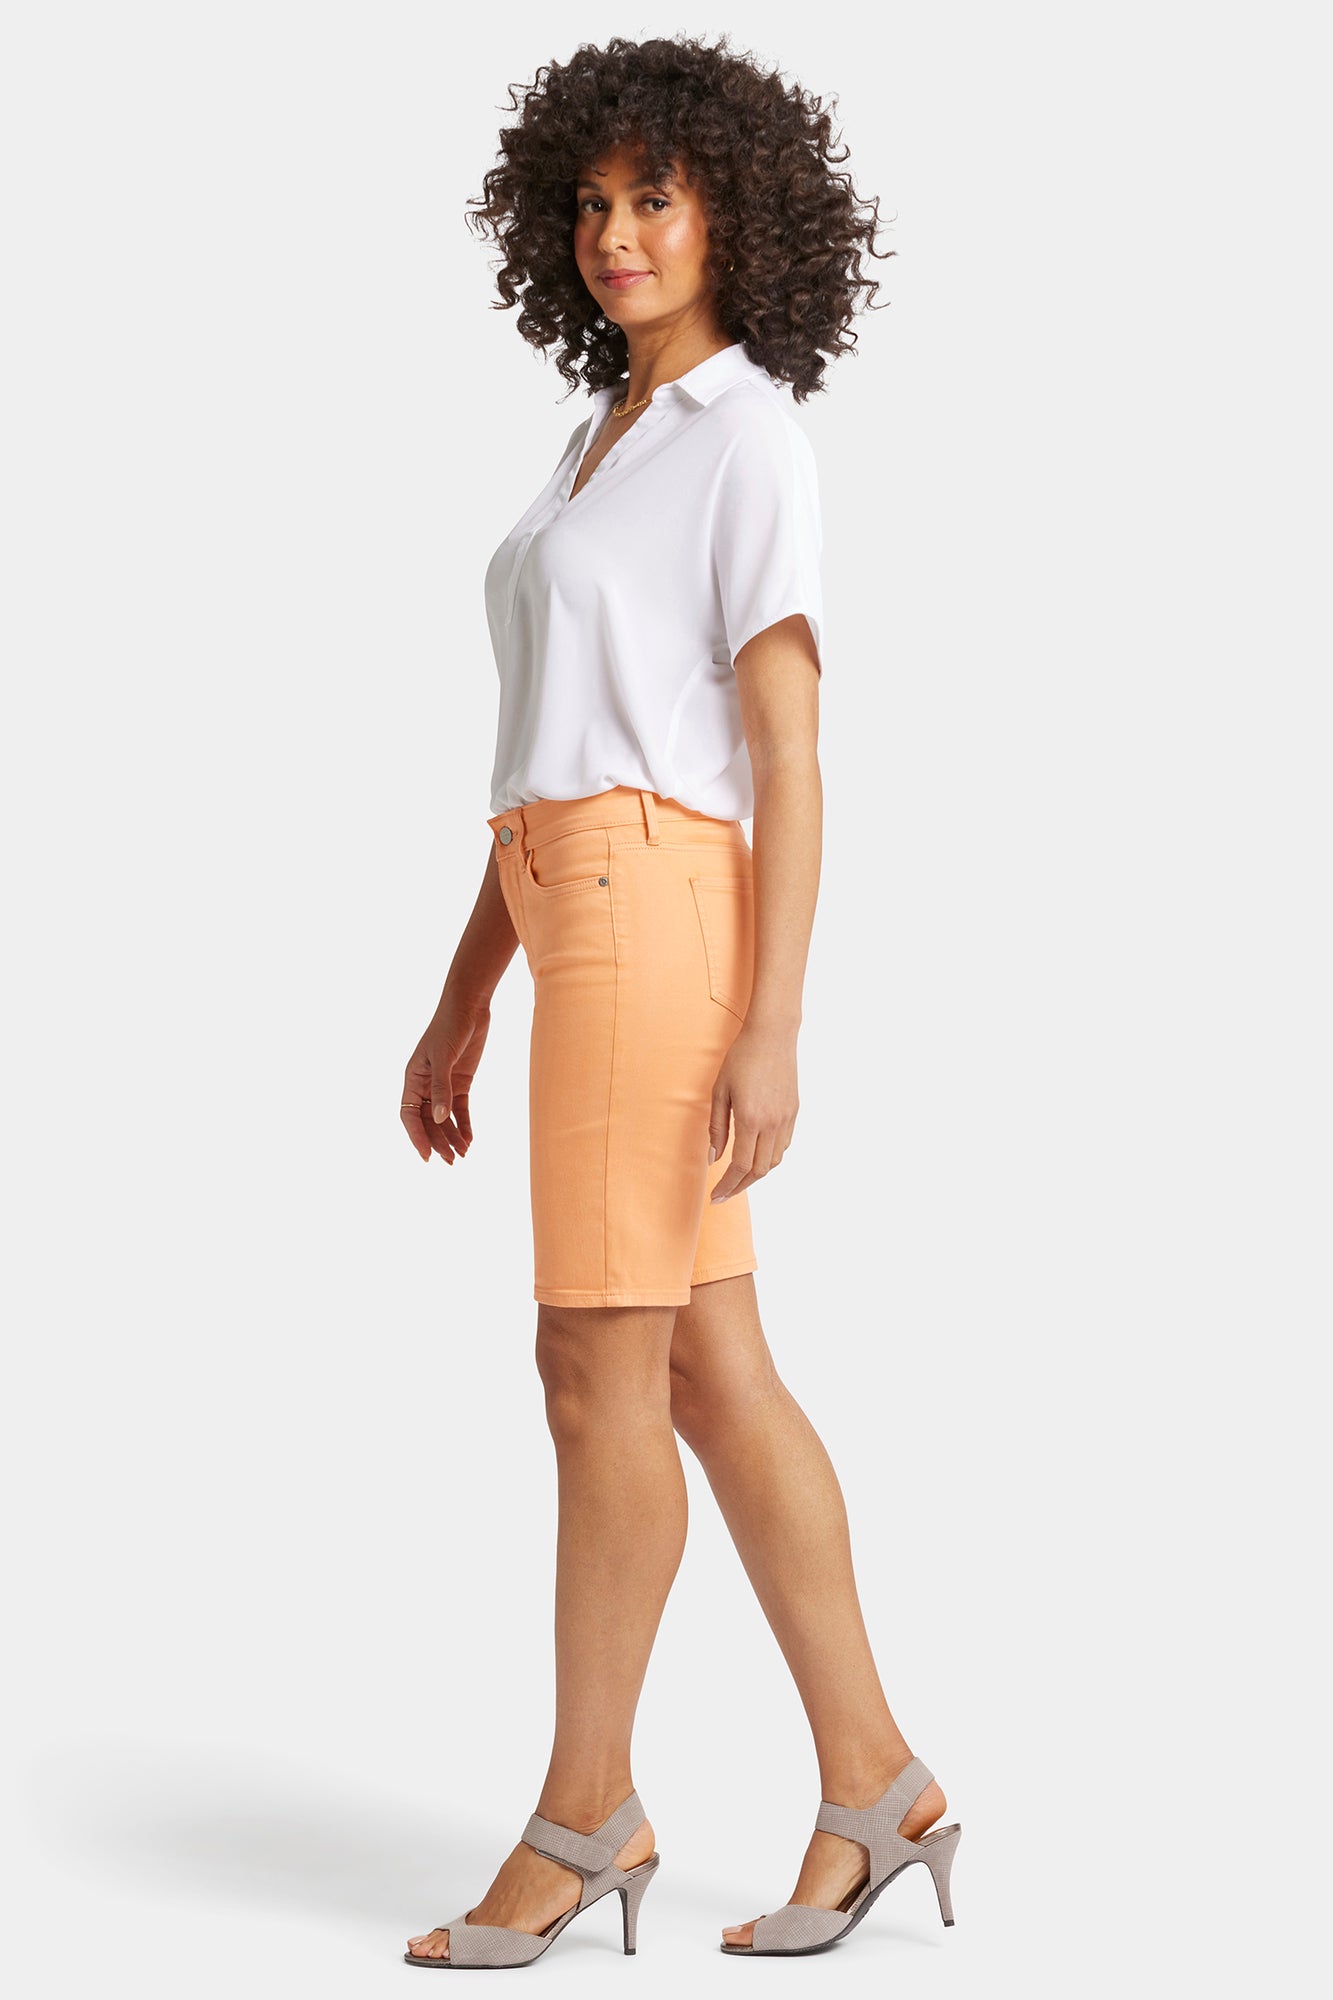 NYDJ Briella 11 Inch Denim Shorts  - Apricot Crush